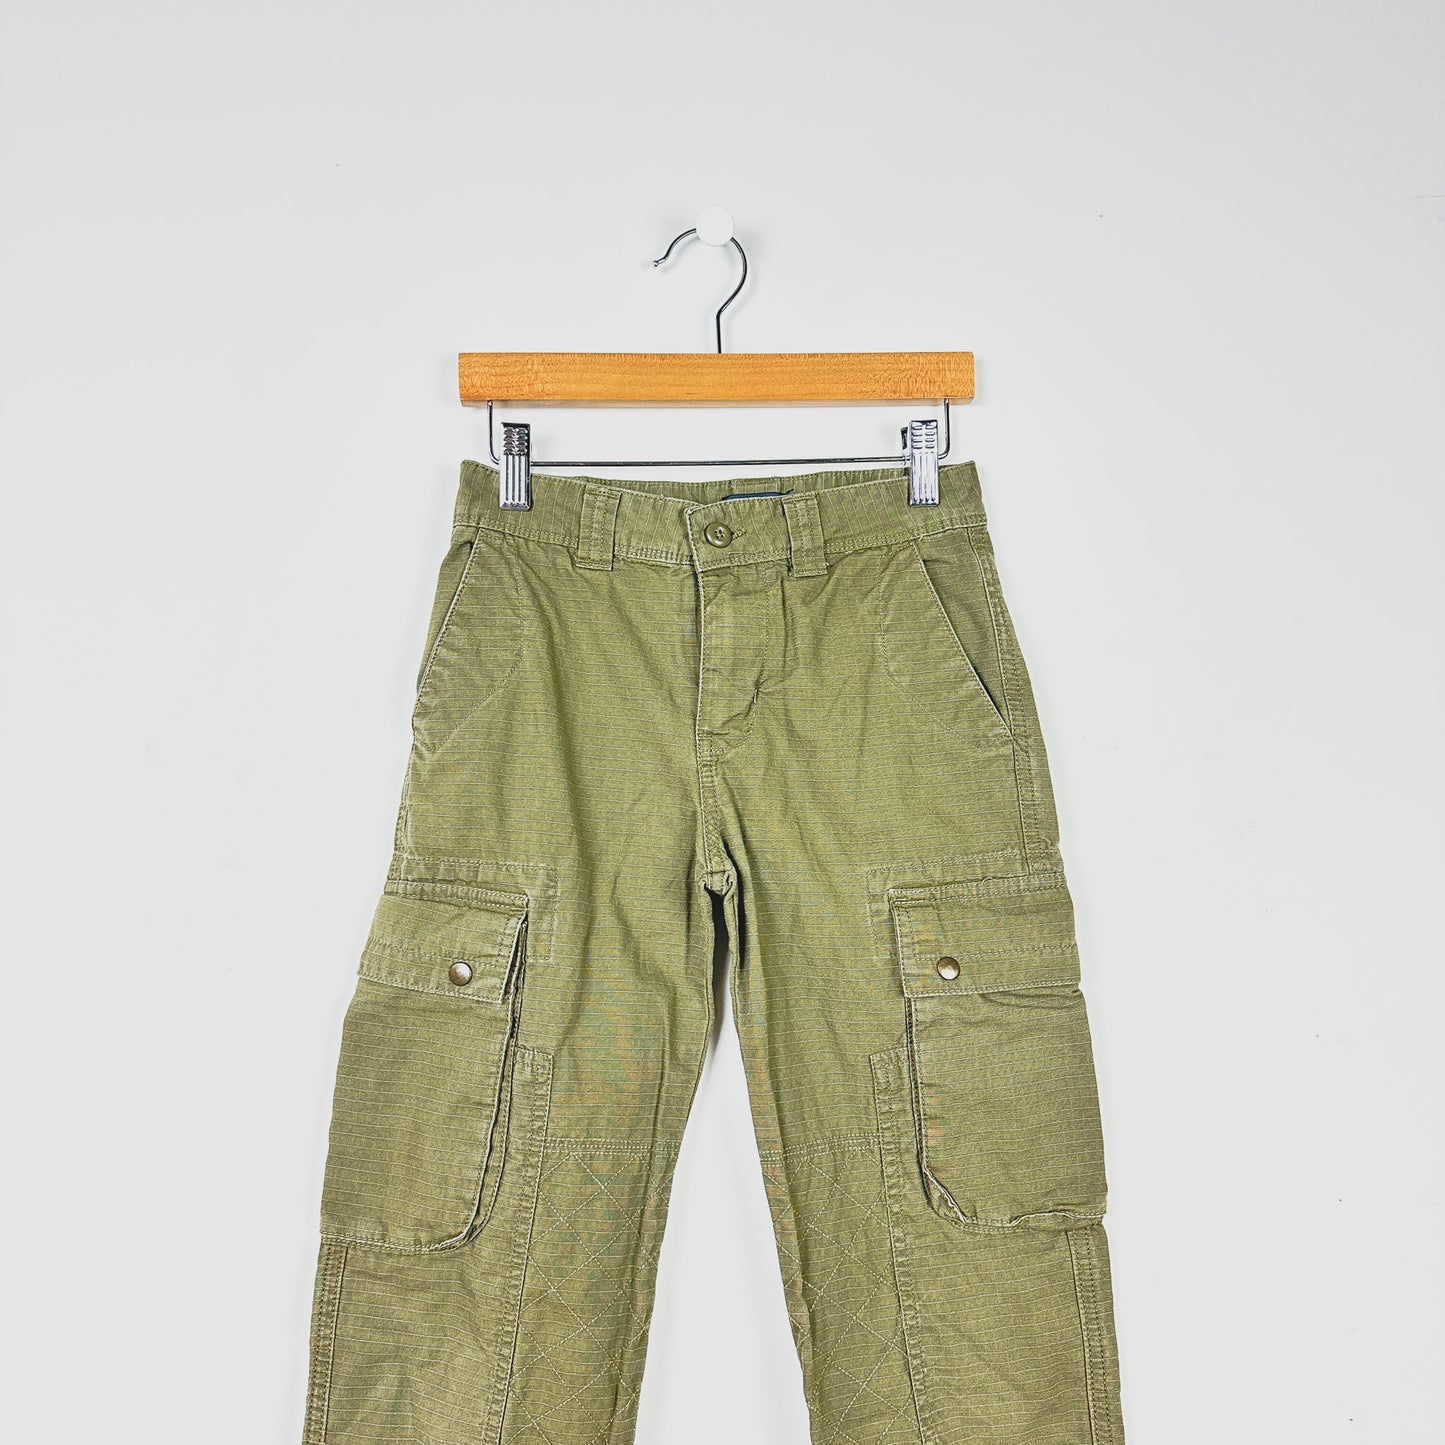 Vintage POLO Rip-Stop Cargo Pants - Size 8yr